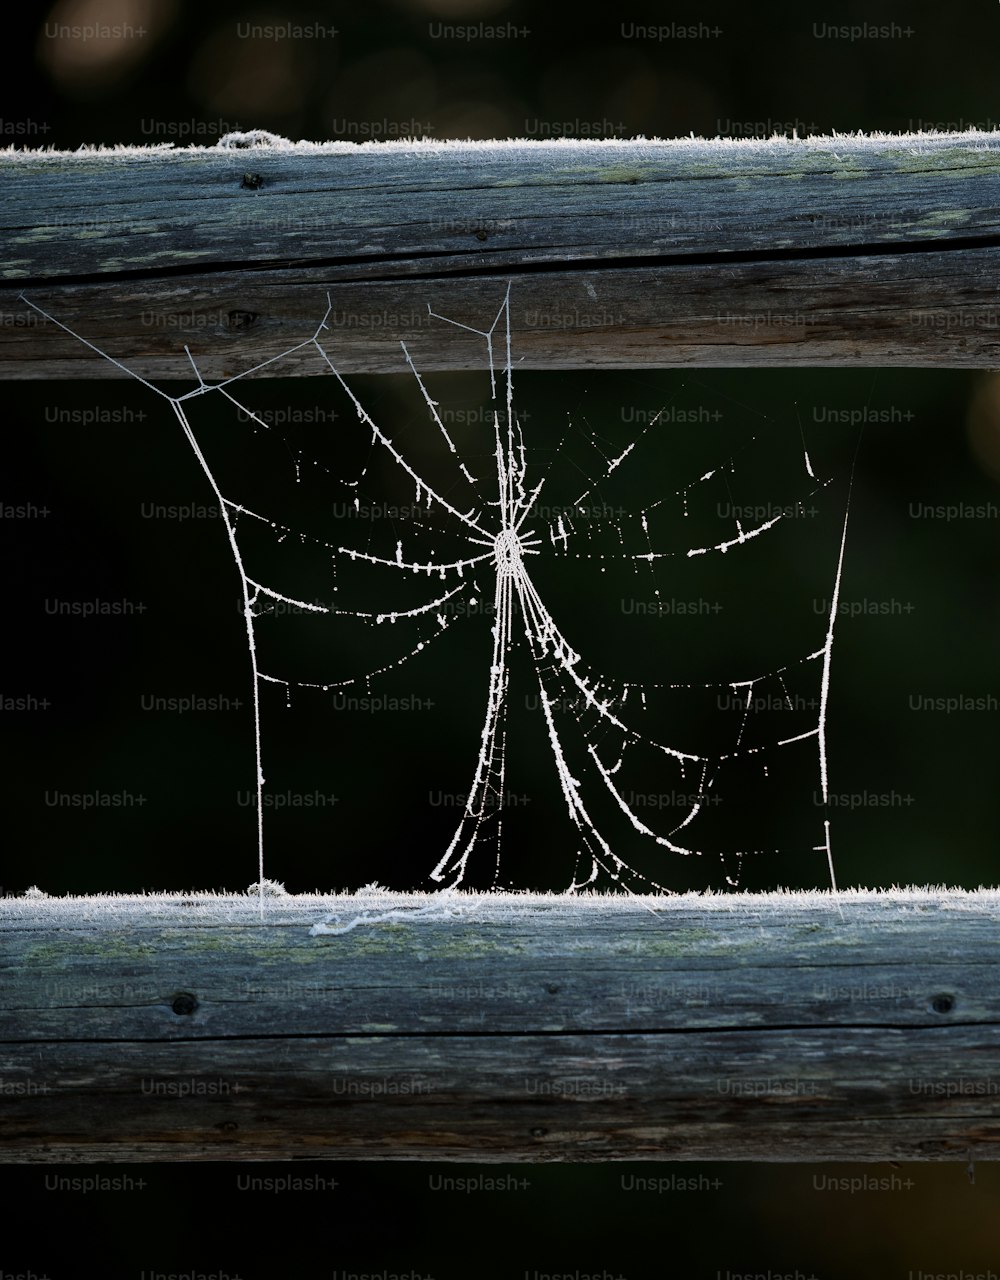 1000+ Spider Web Pictures  Download Free Images on Unsplash